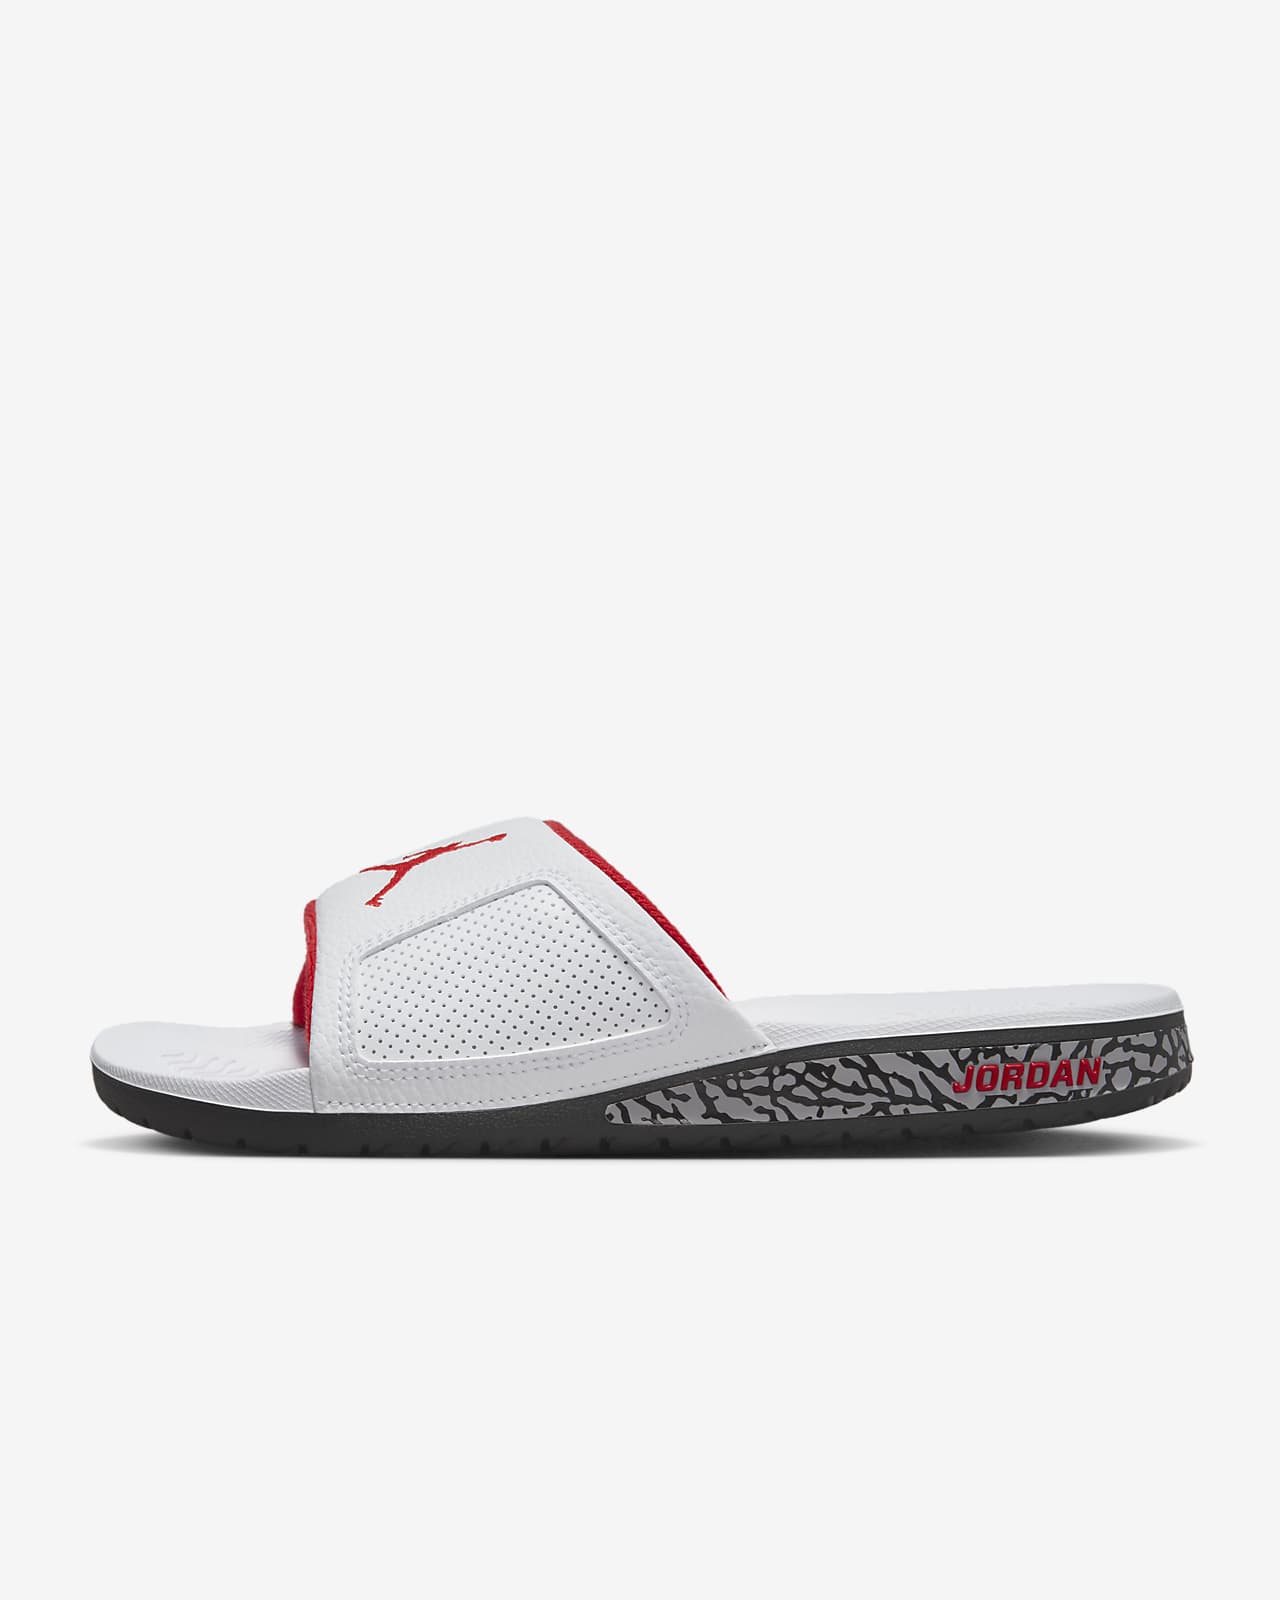 Jordan Hydro III Men's Nike.com